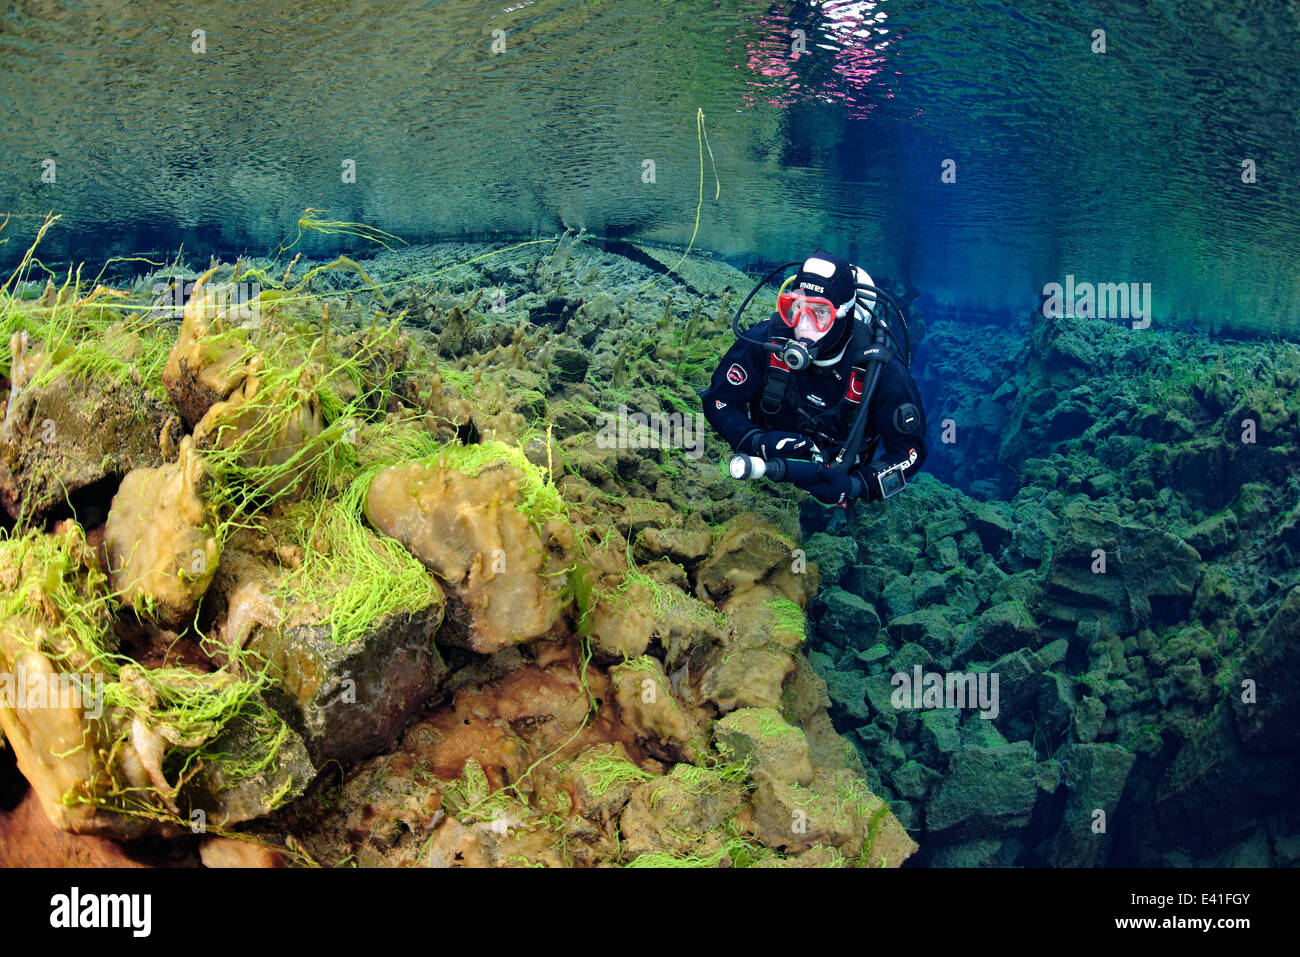 Mid atlantic ridge underwater hi-res stock photography and images - Alamy